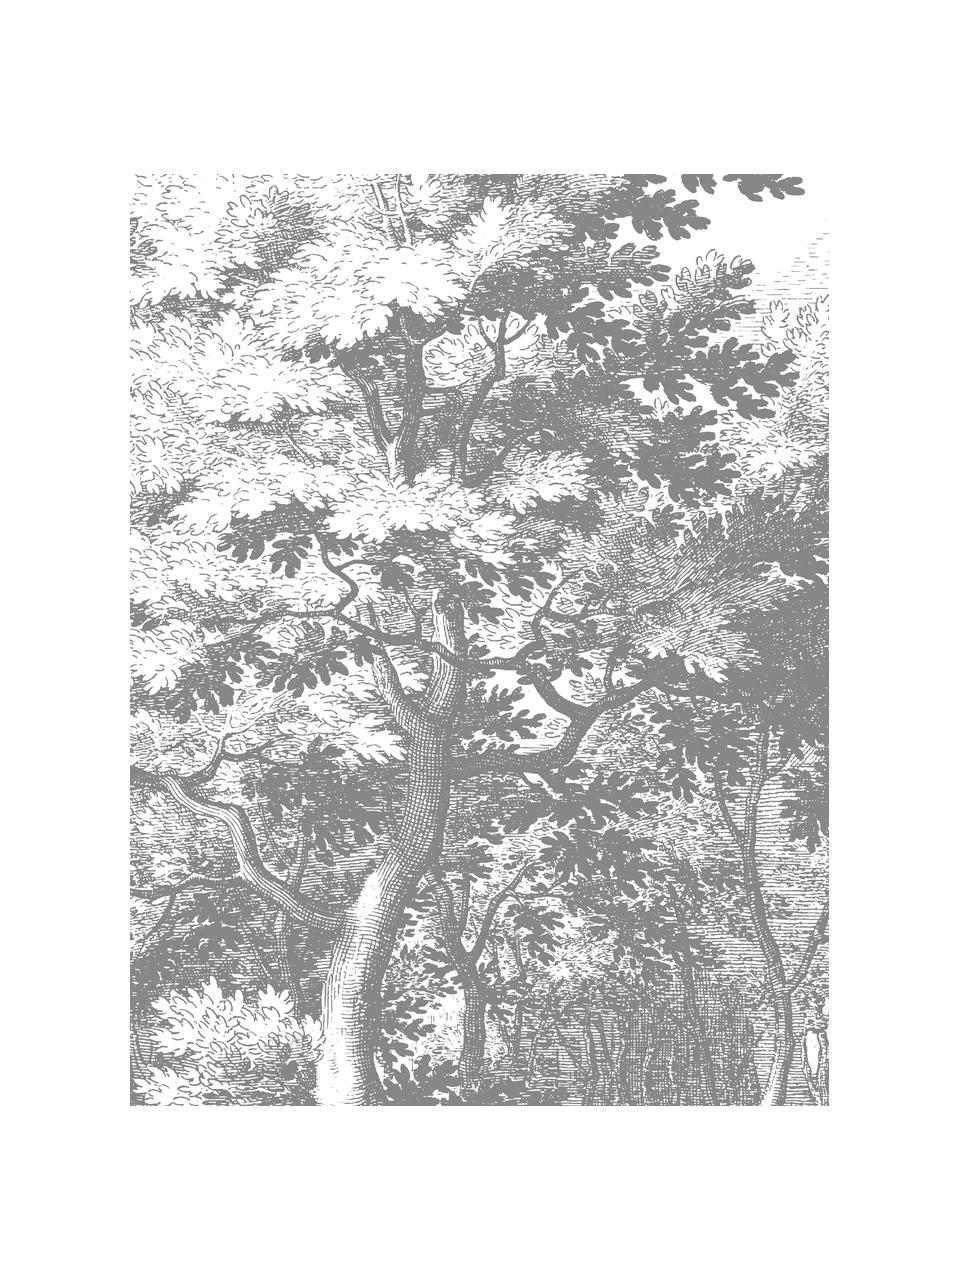 Fototapete Landscapes mit Wald-Motiv, Vlies, Weiss, Grau, B 190 x H 220 cm